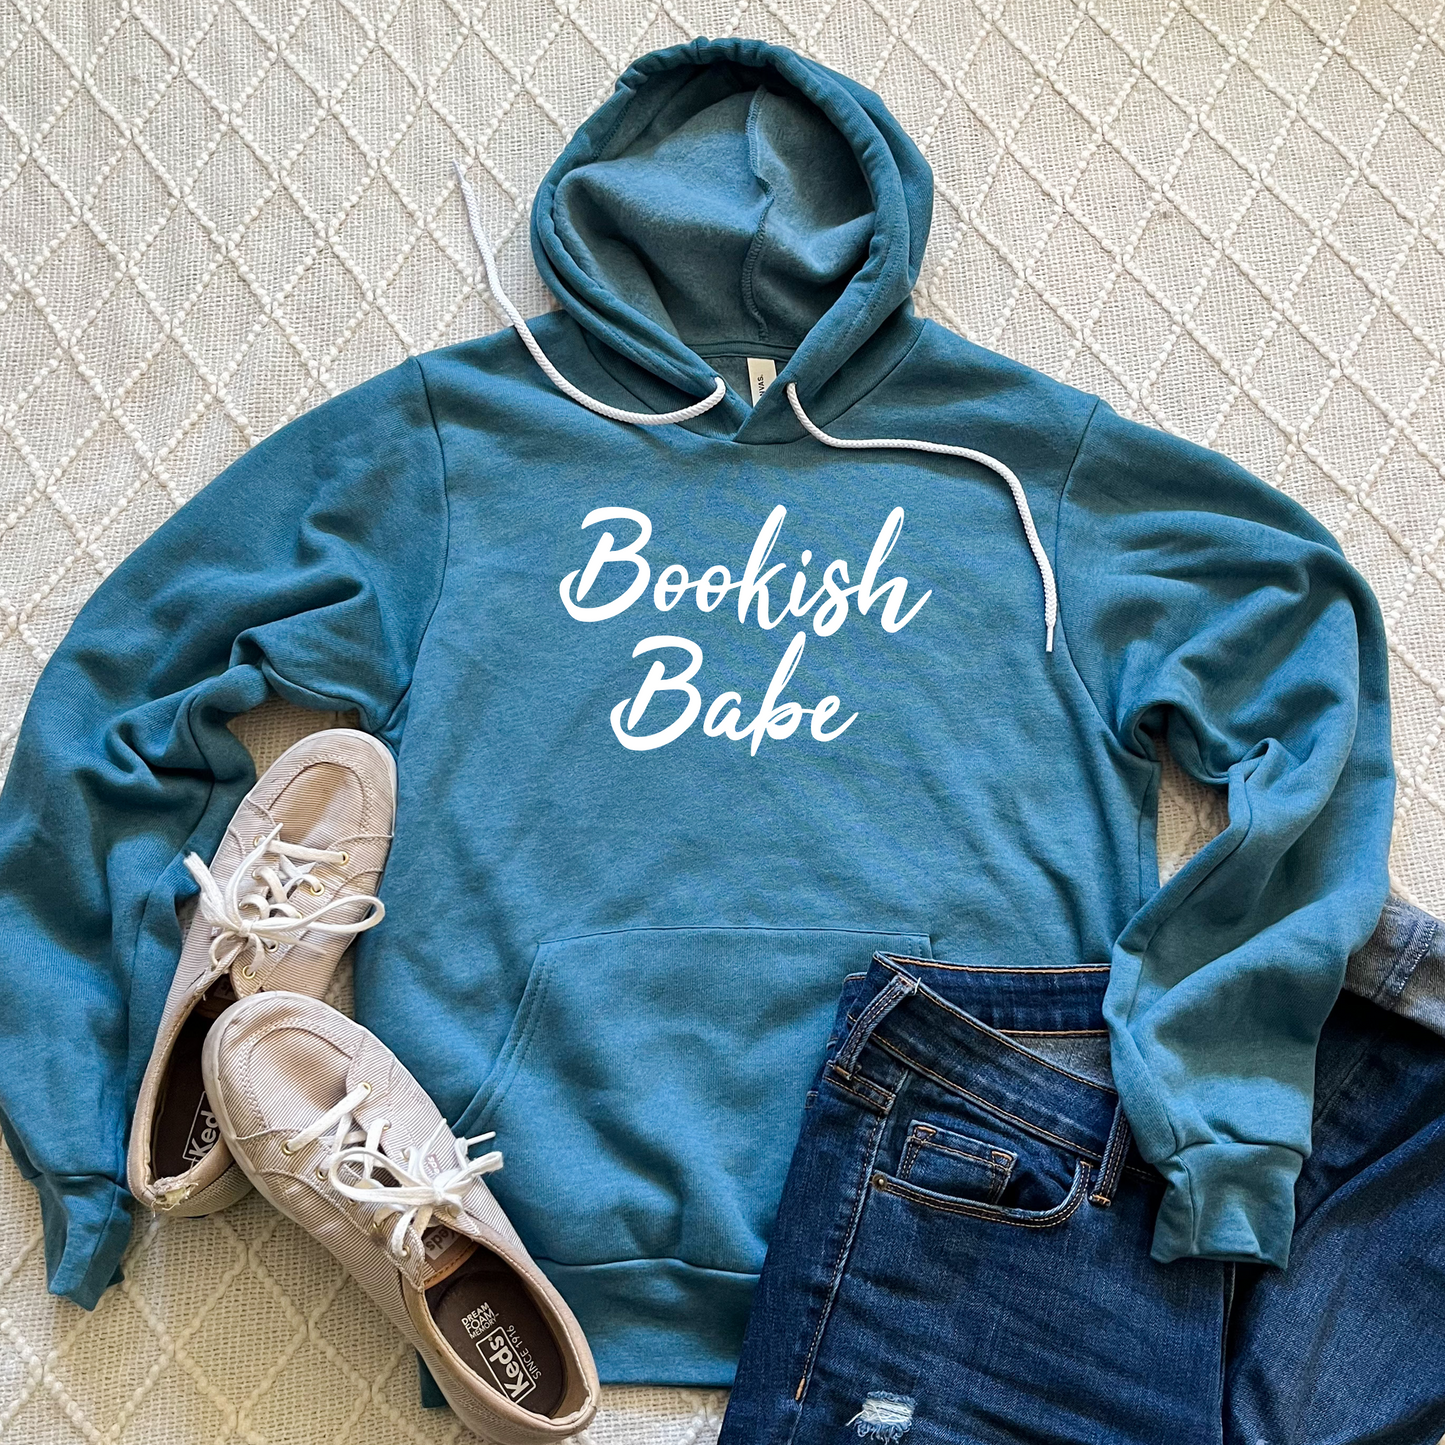 Bookish Babe Sweatshirts